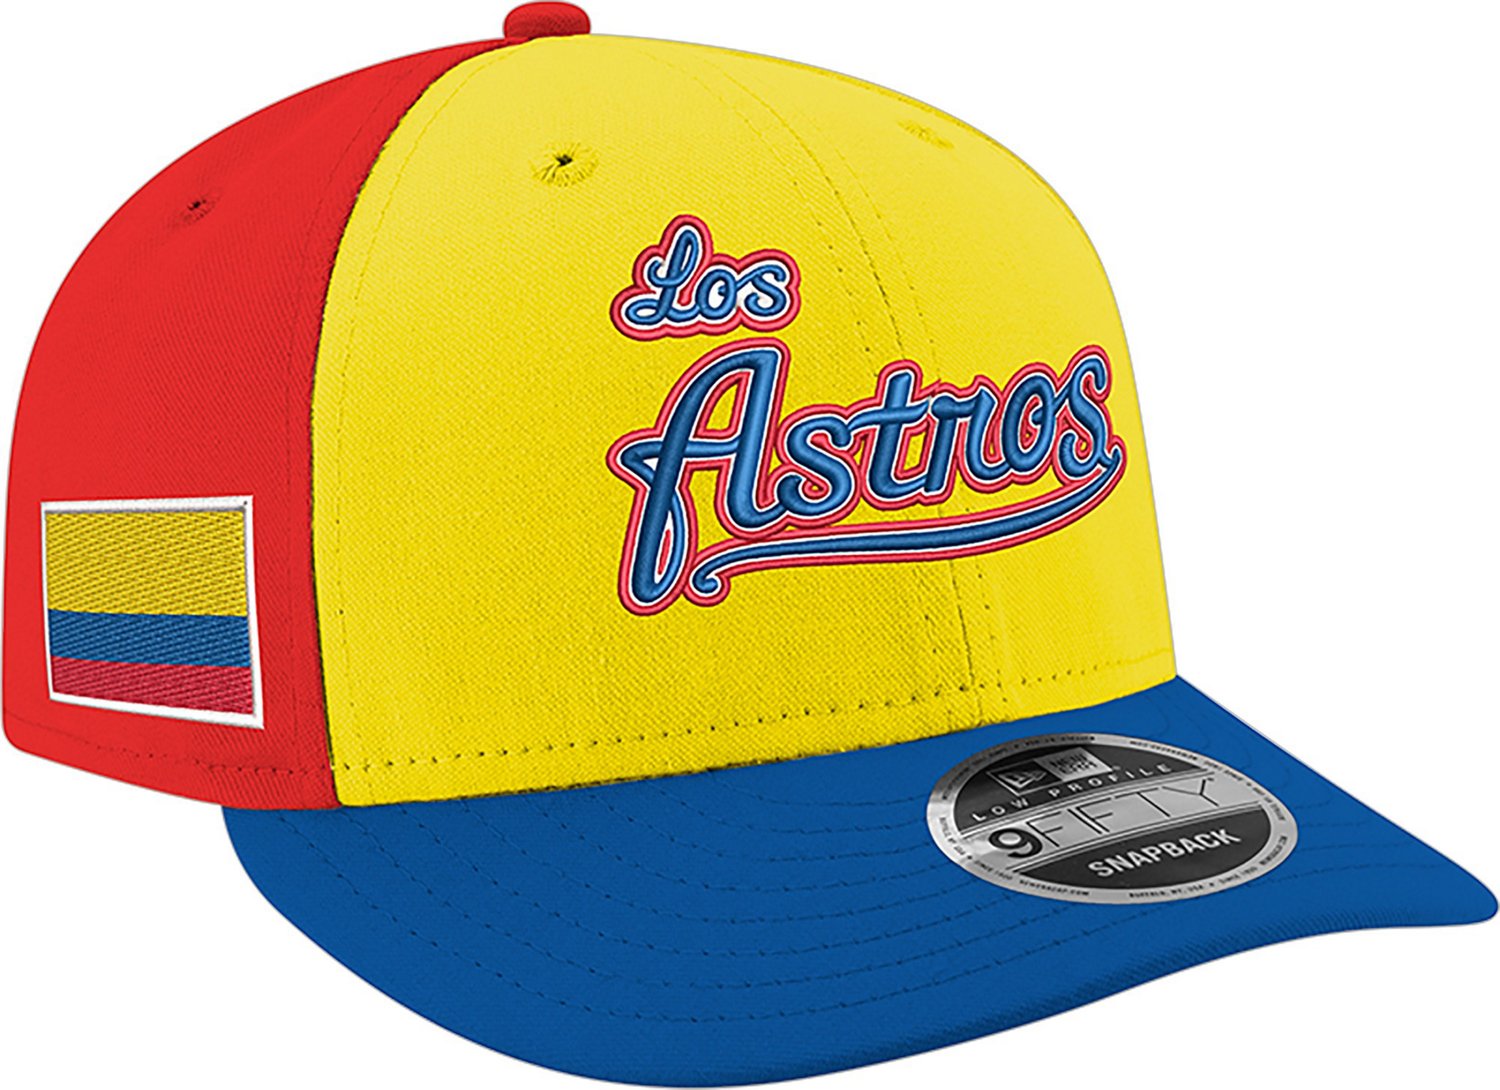 Academy Launches Exclusive 'Mi Patria' Houston Astros Apparel Collection